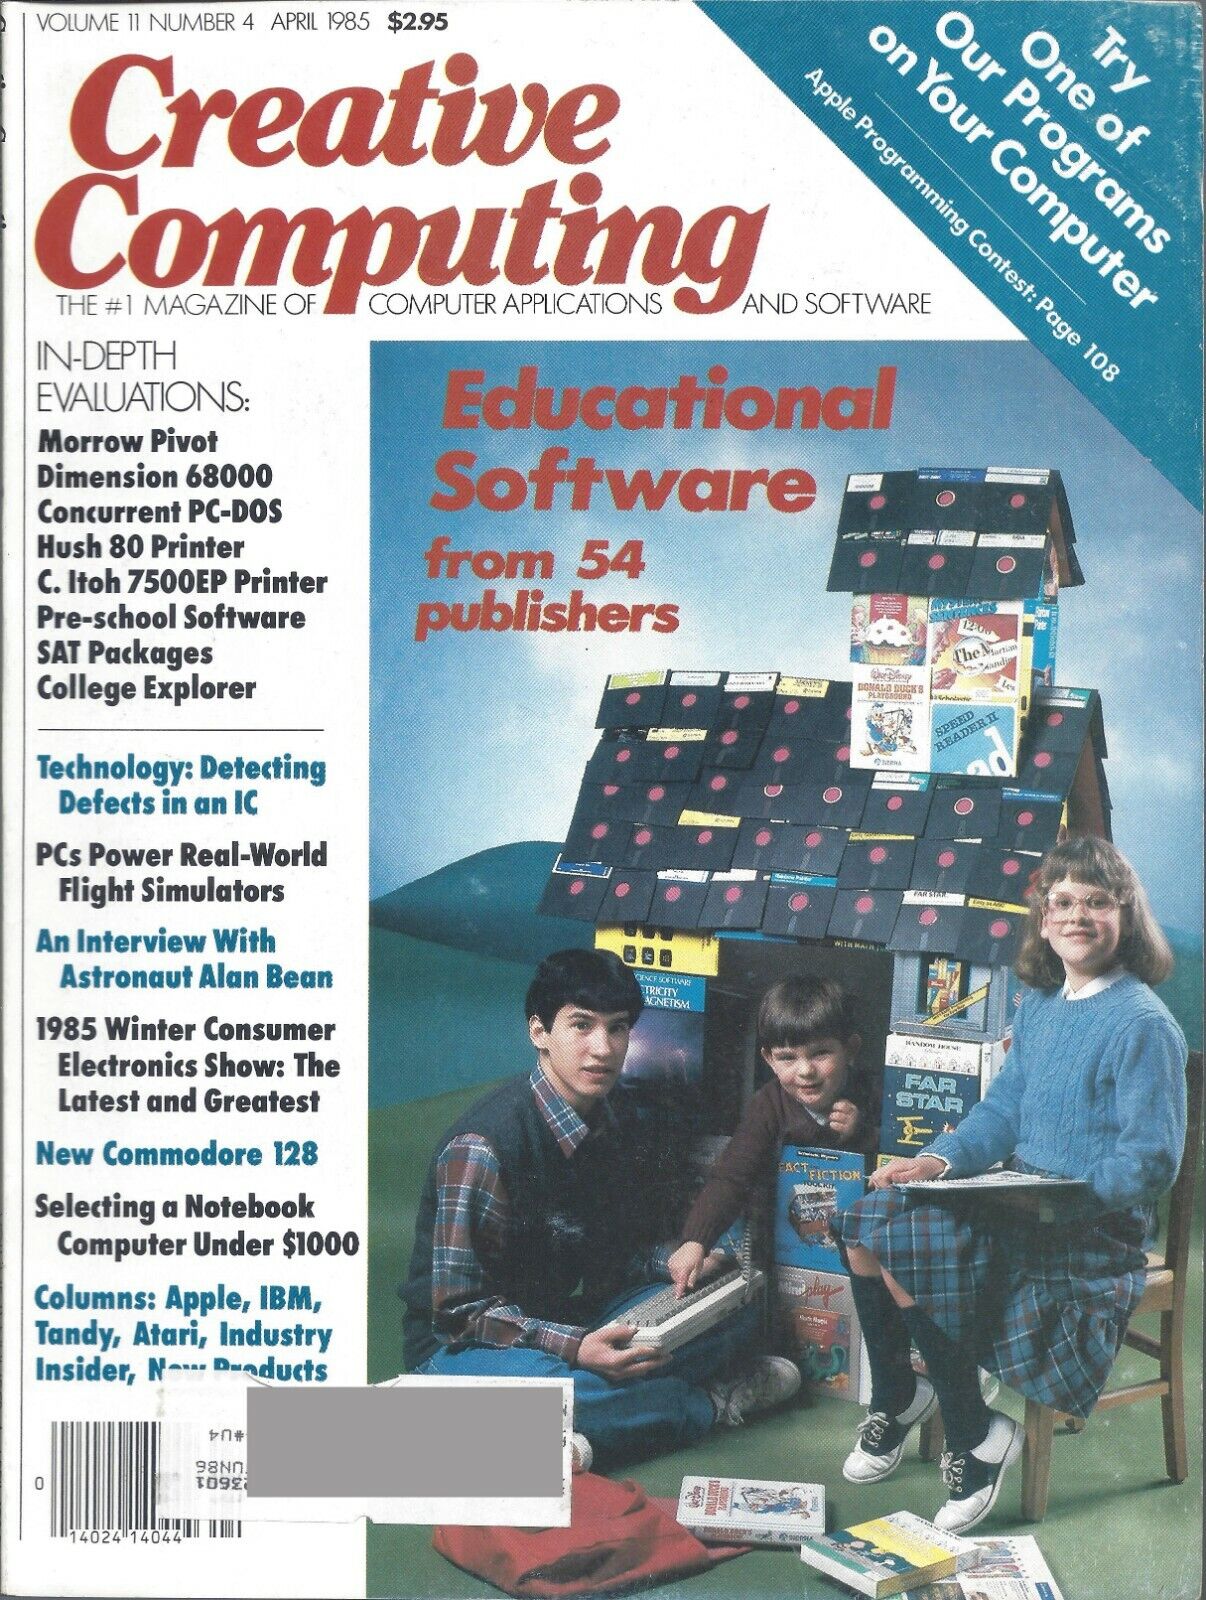 Creative Computing Magazine, April 1985